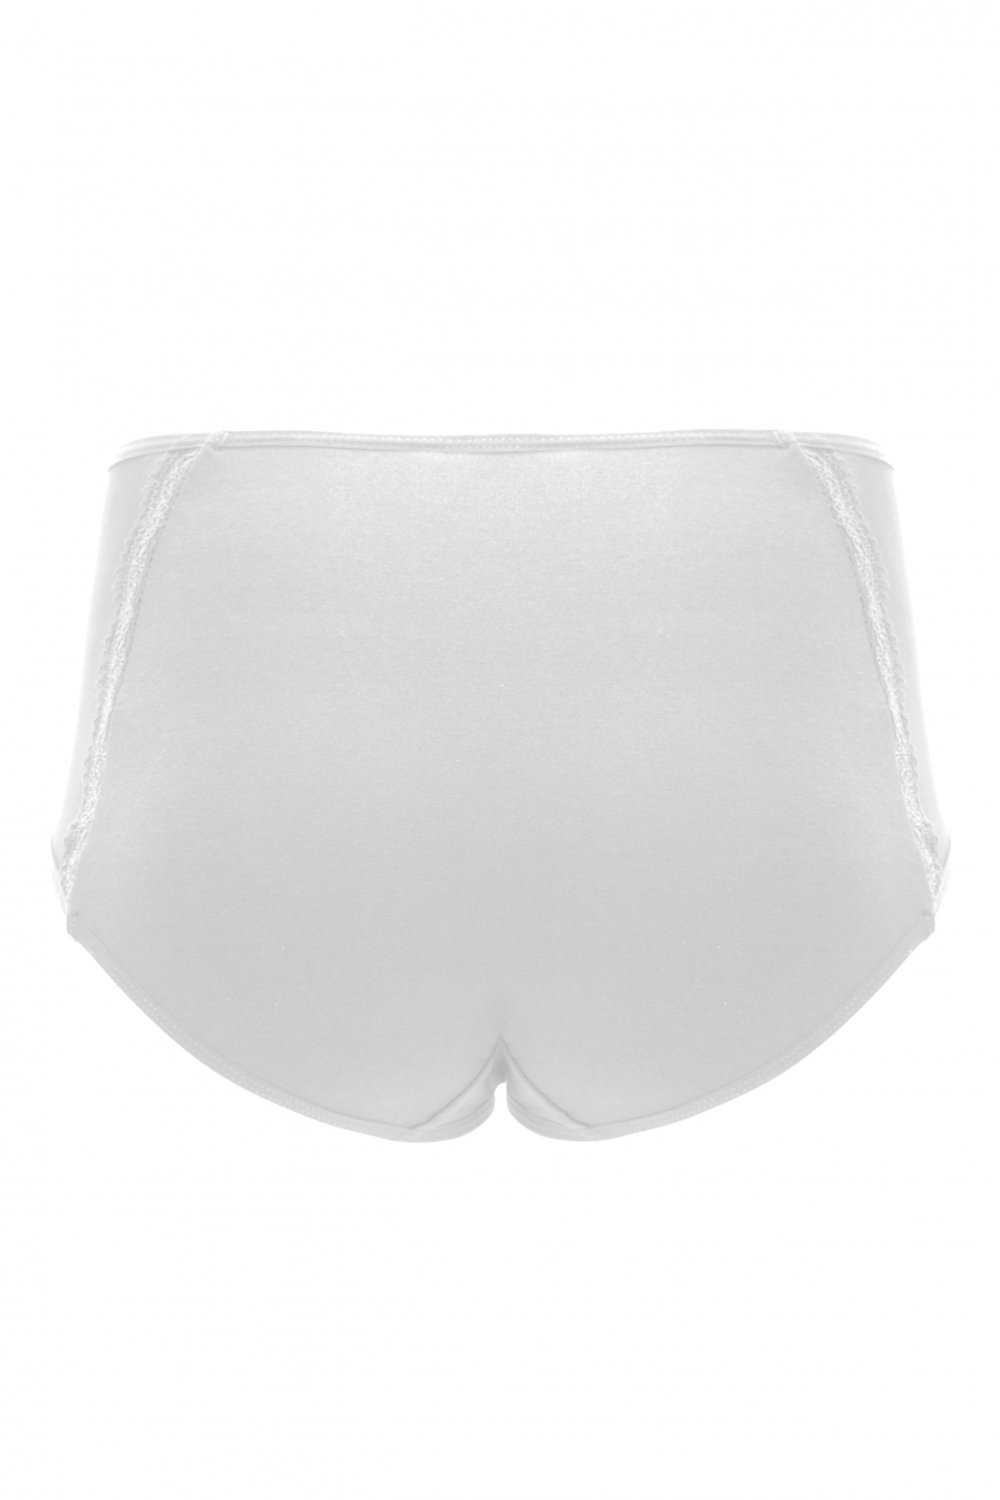 Dámské kalhotky white Bílá XXL model 16192839 - Emili